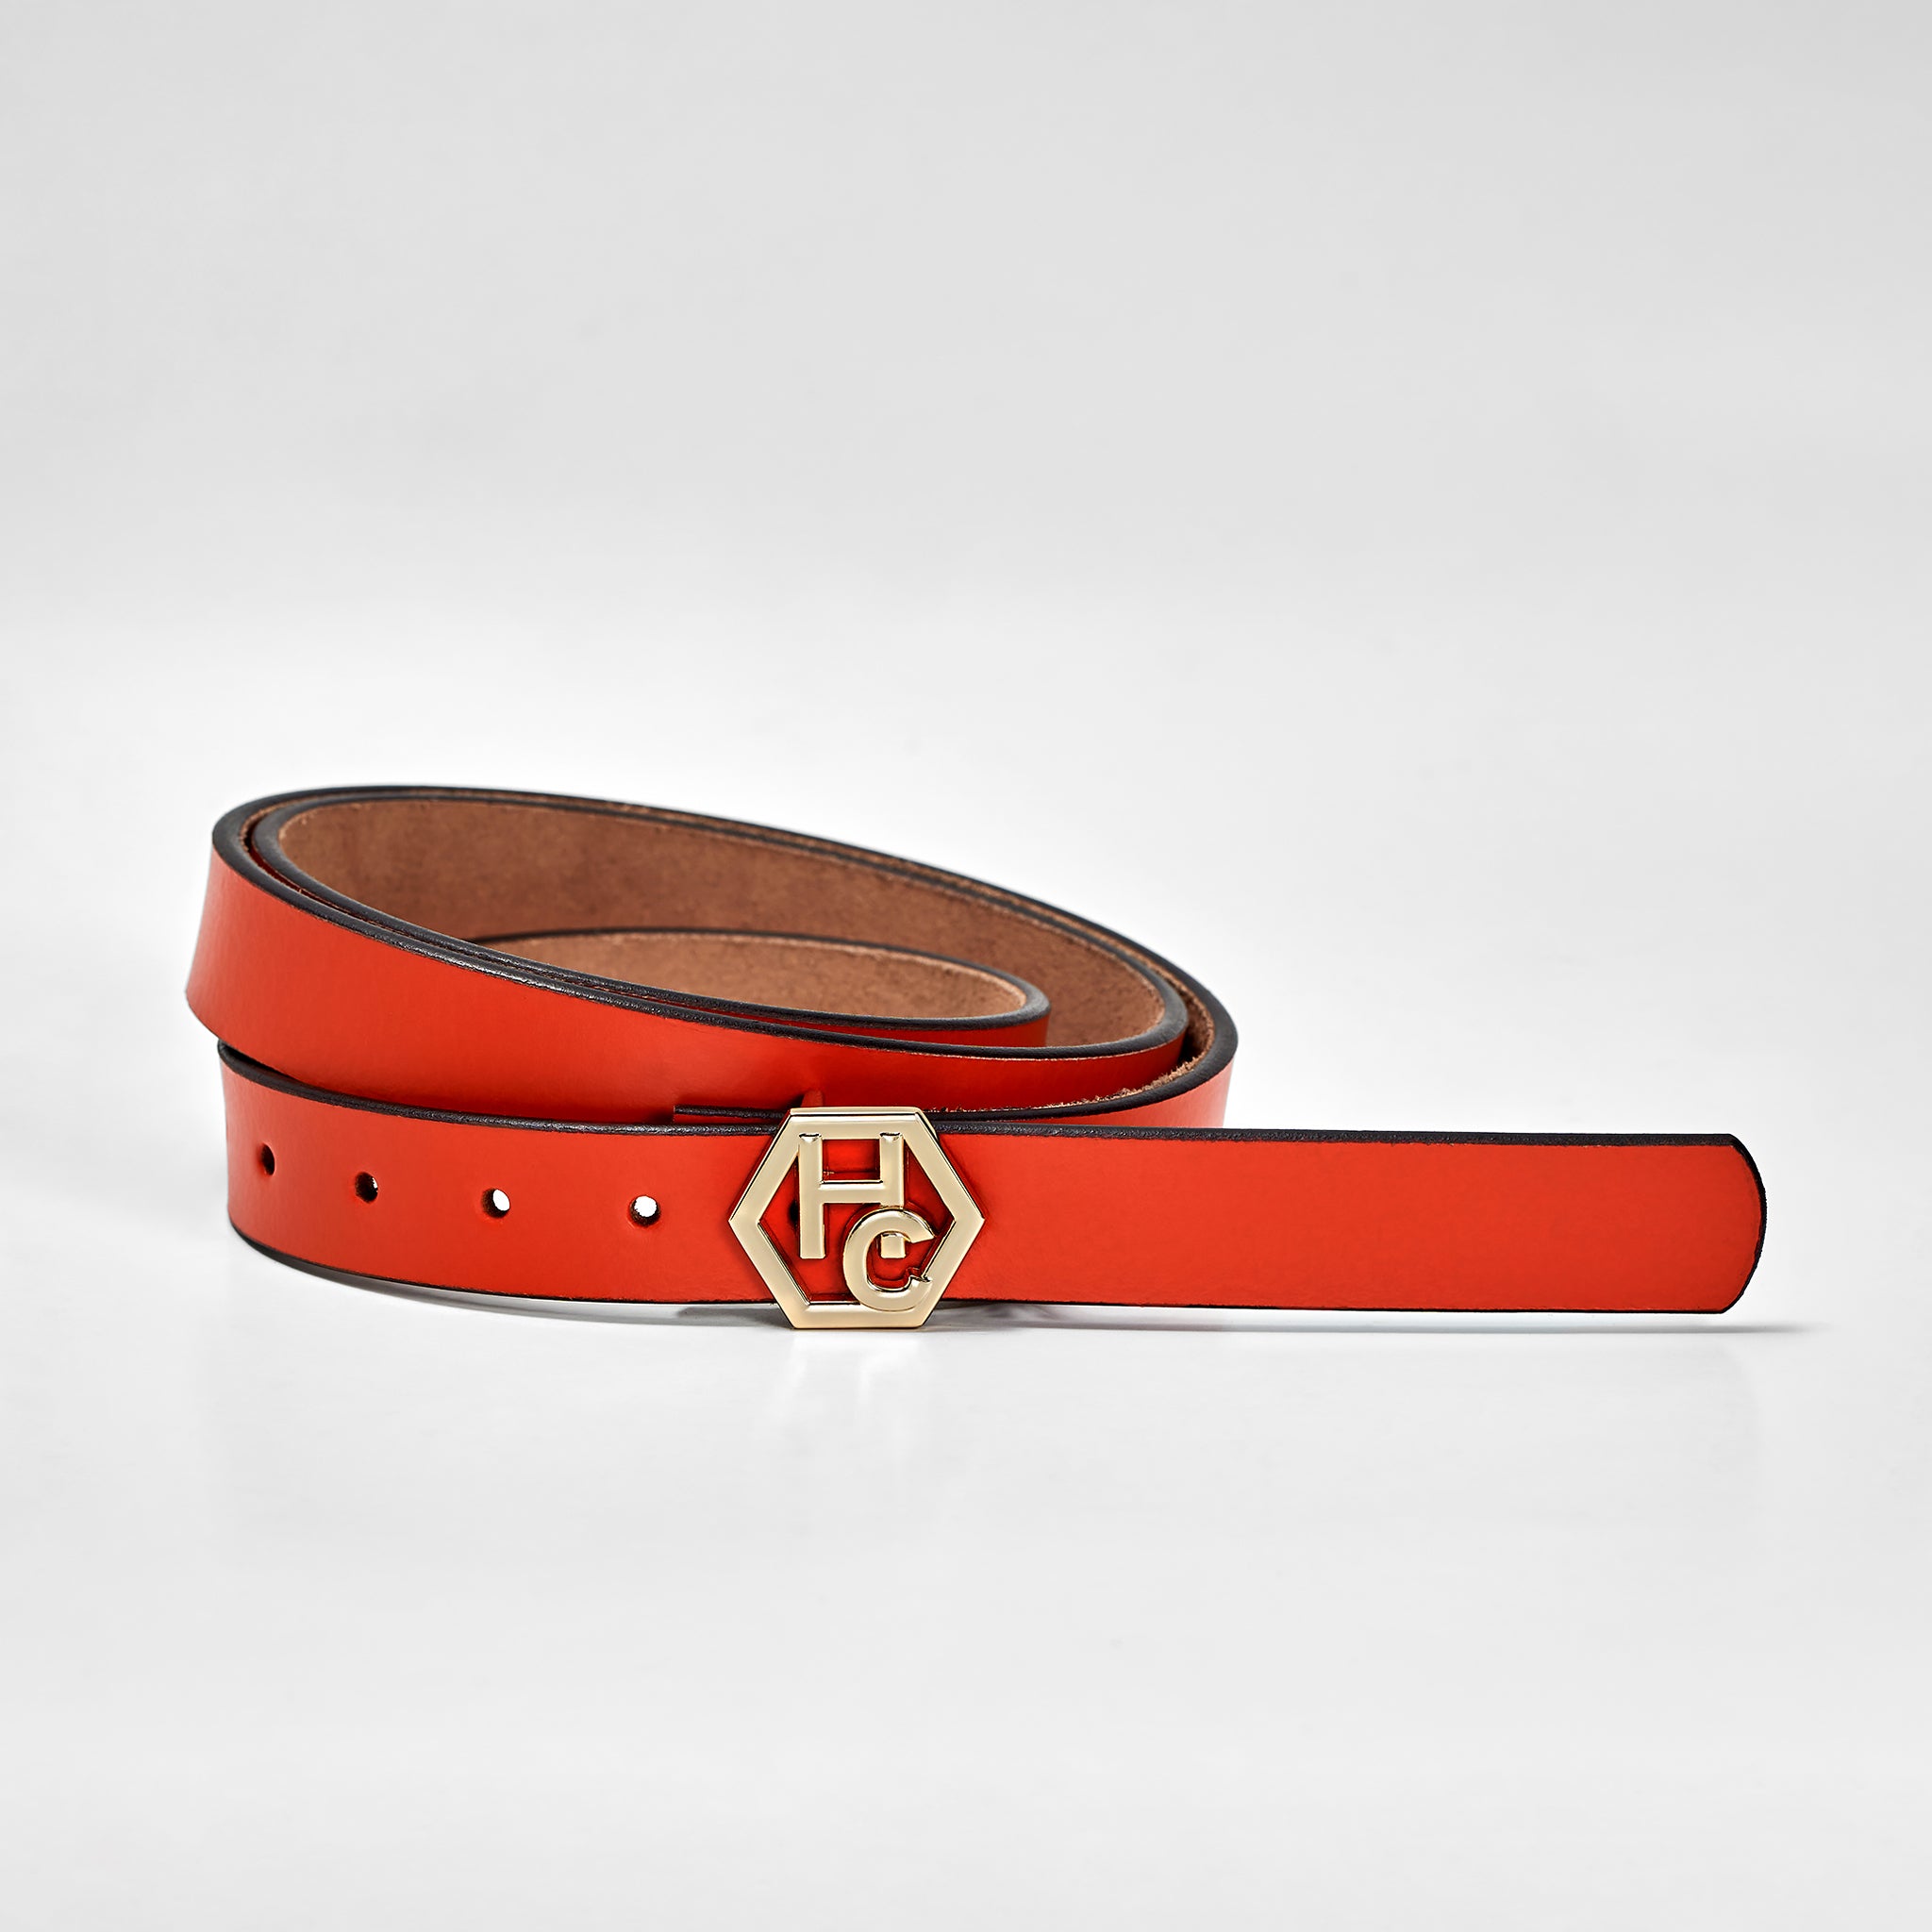 Hedonist Chicago Seamless Orange Red Leather Belt 1" 32381337829527